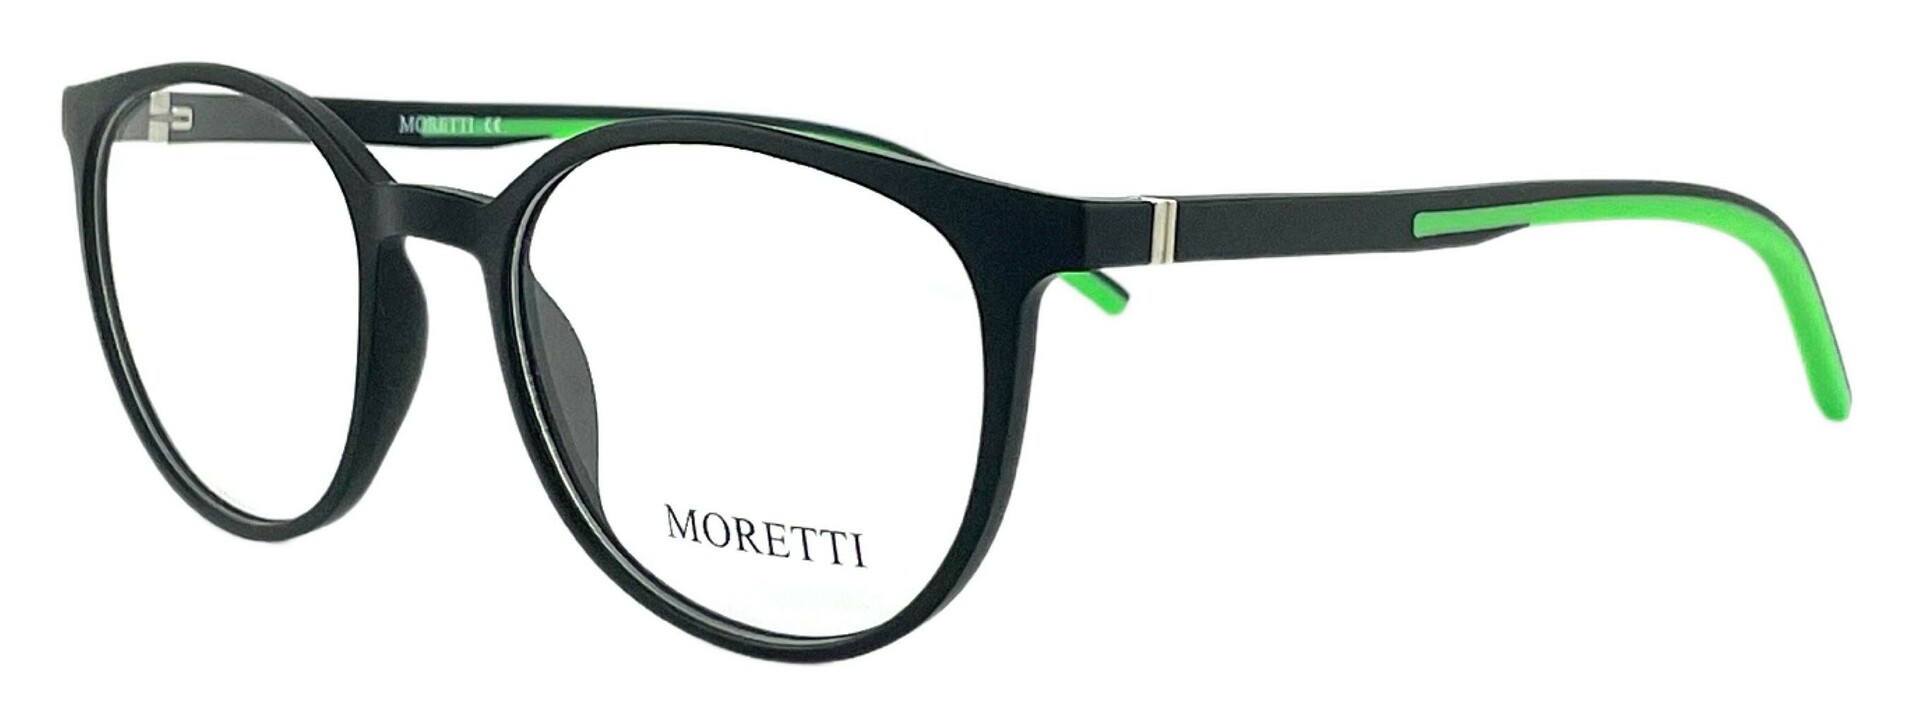 Moretti MZ10-17 C.01V 2